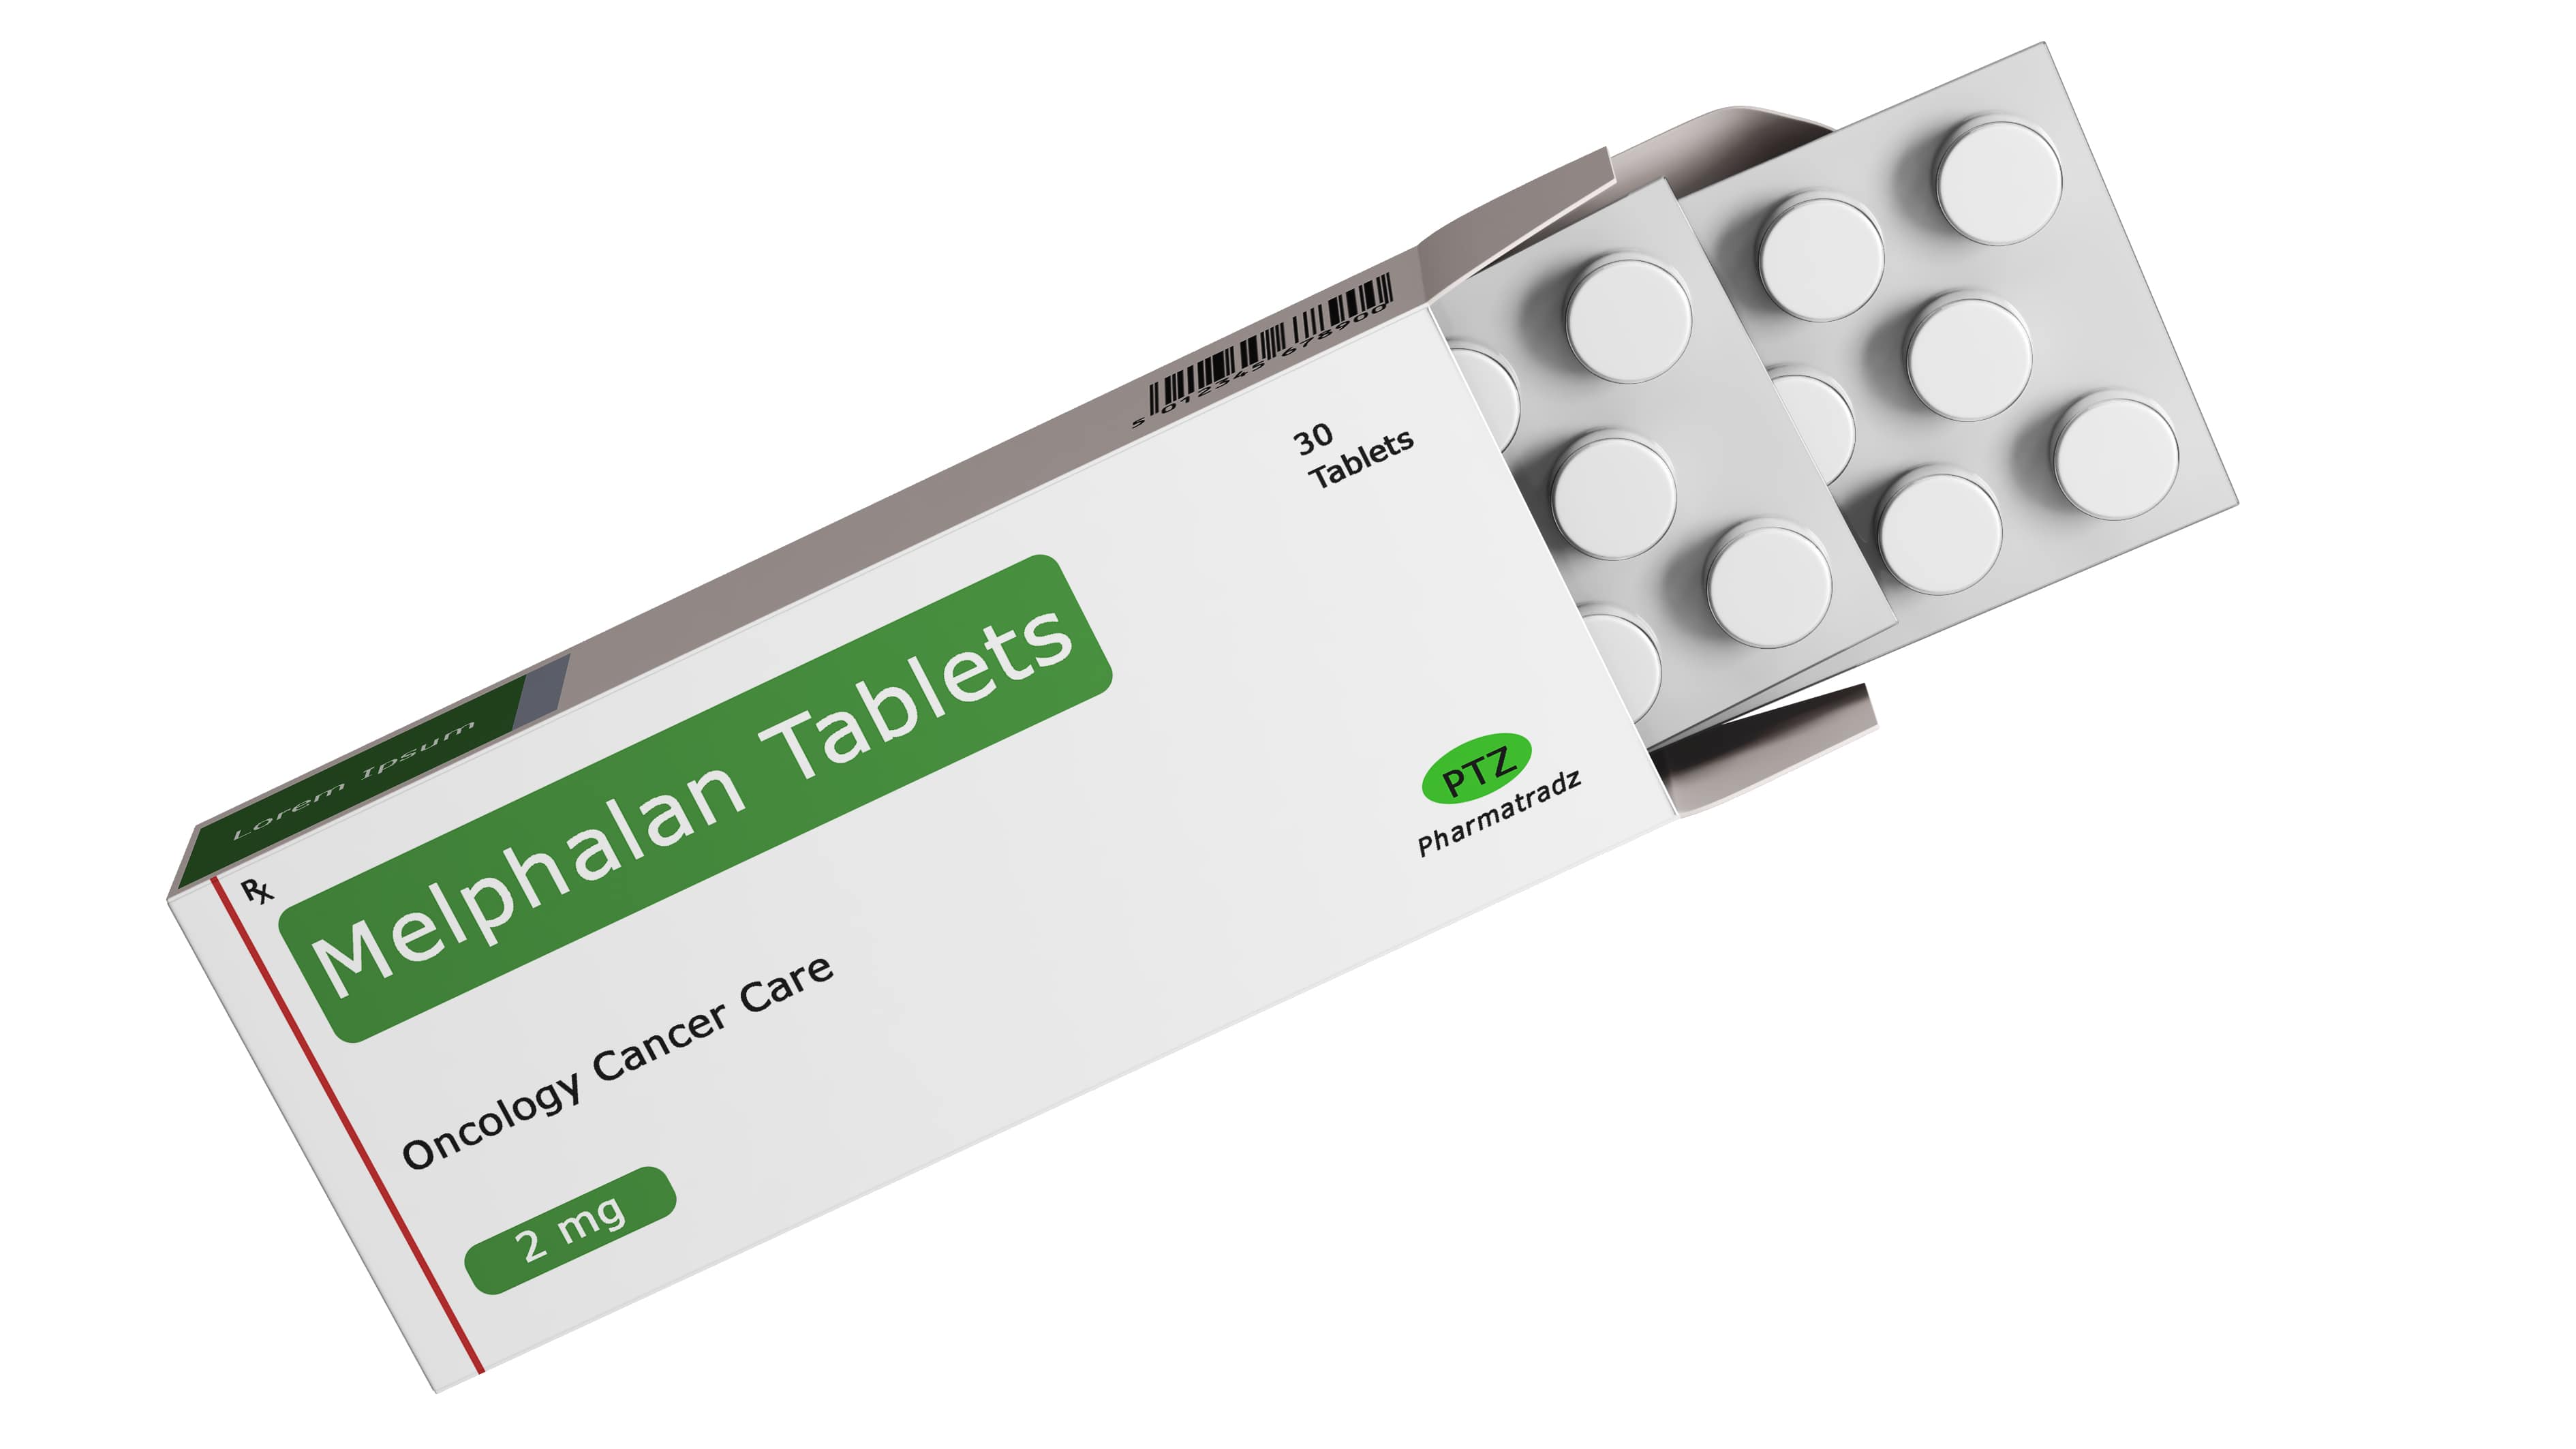 Melphalan Tablets